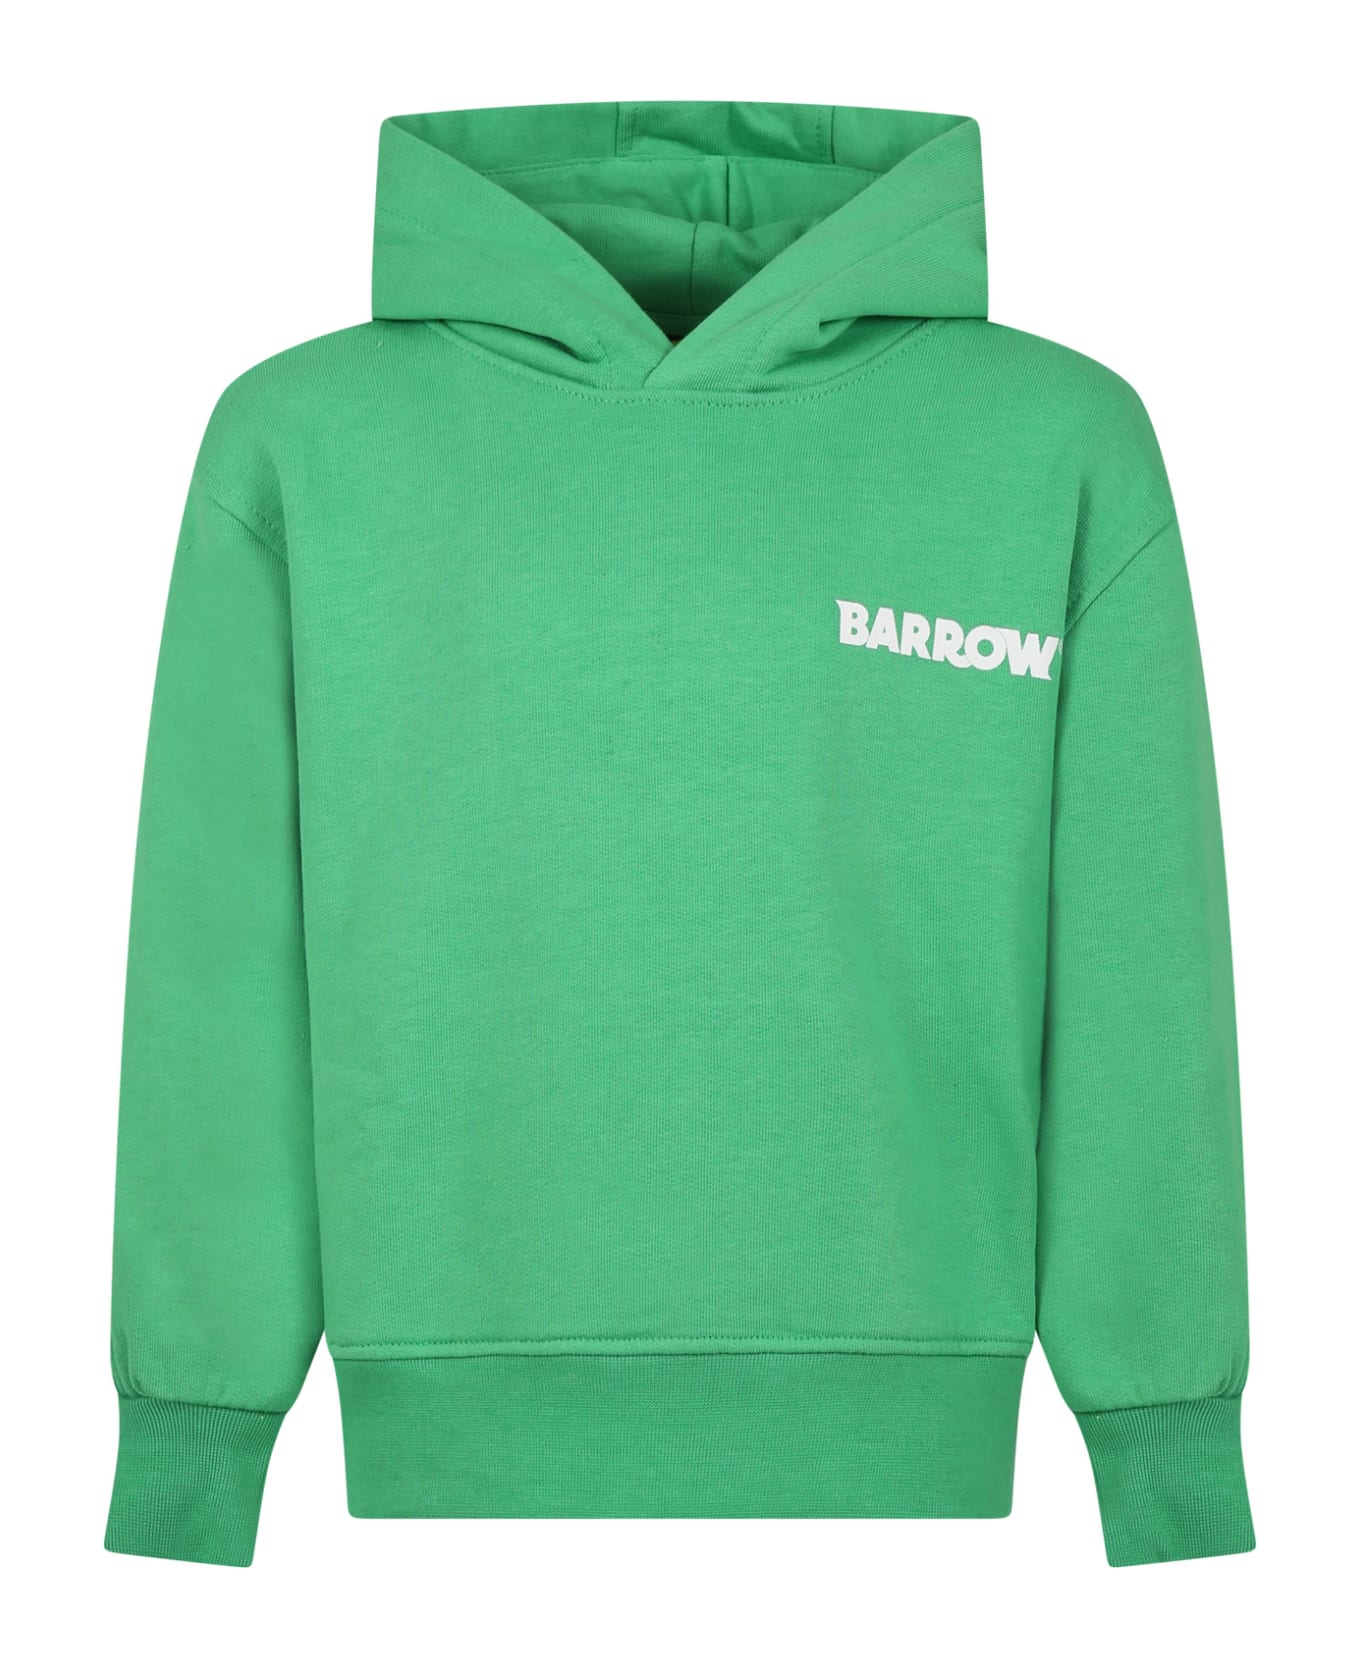 Barrow Green Sweatshirt For Kids With Logo And Iconic Smiley Face - Fern Green ニットウェア＆スウェットシャツ